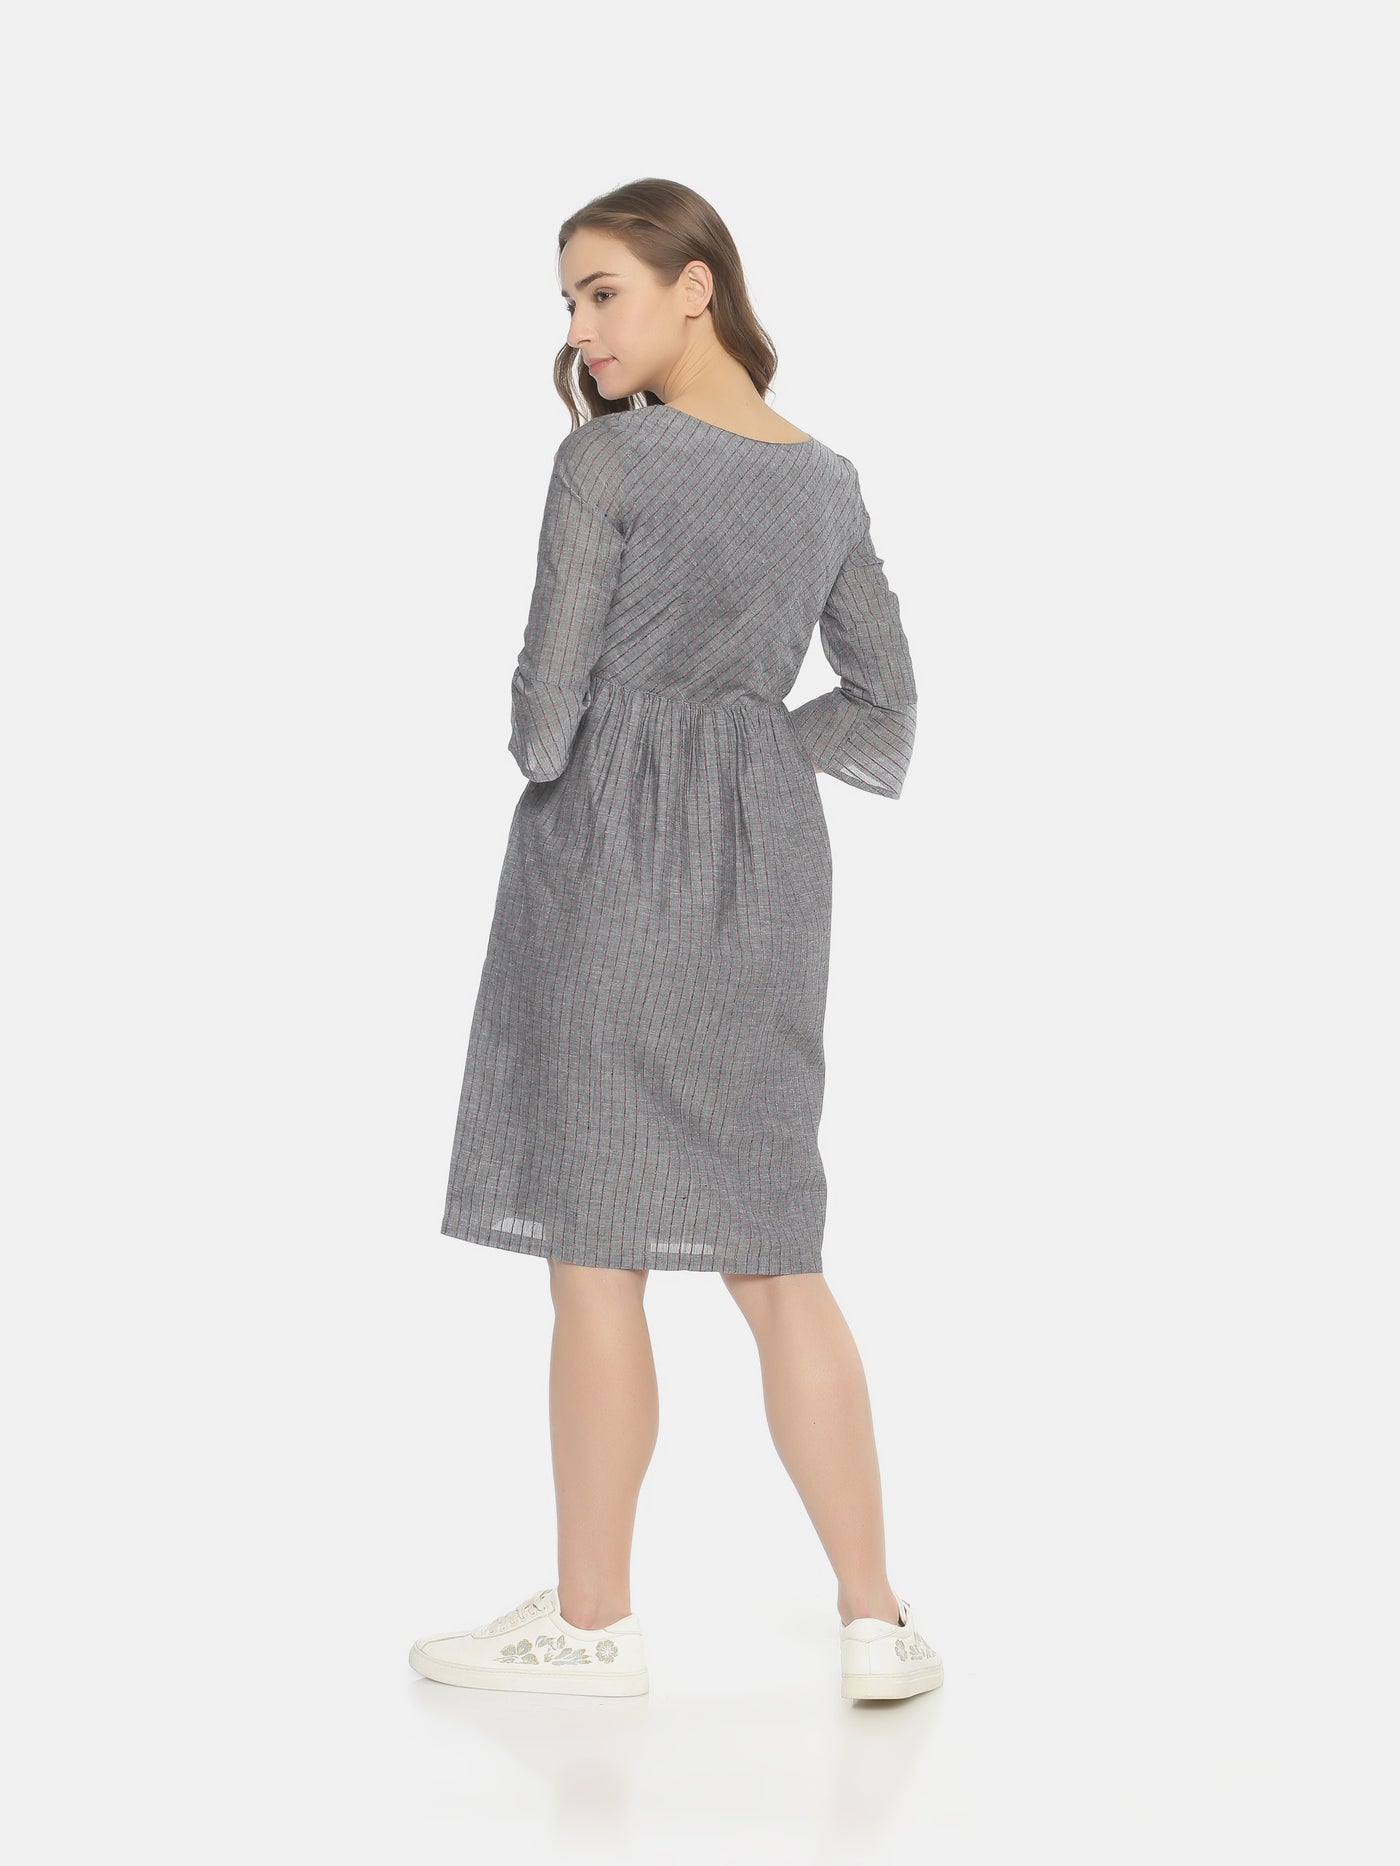 Bell Sleeve Dress - Grey - Studio Y